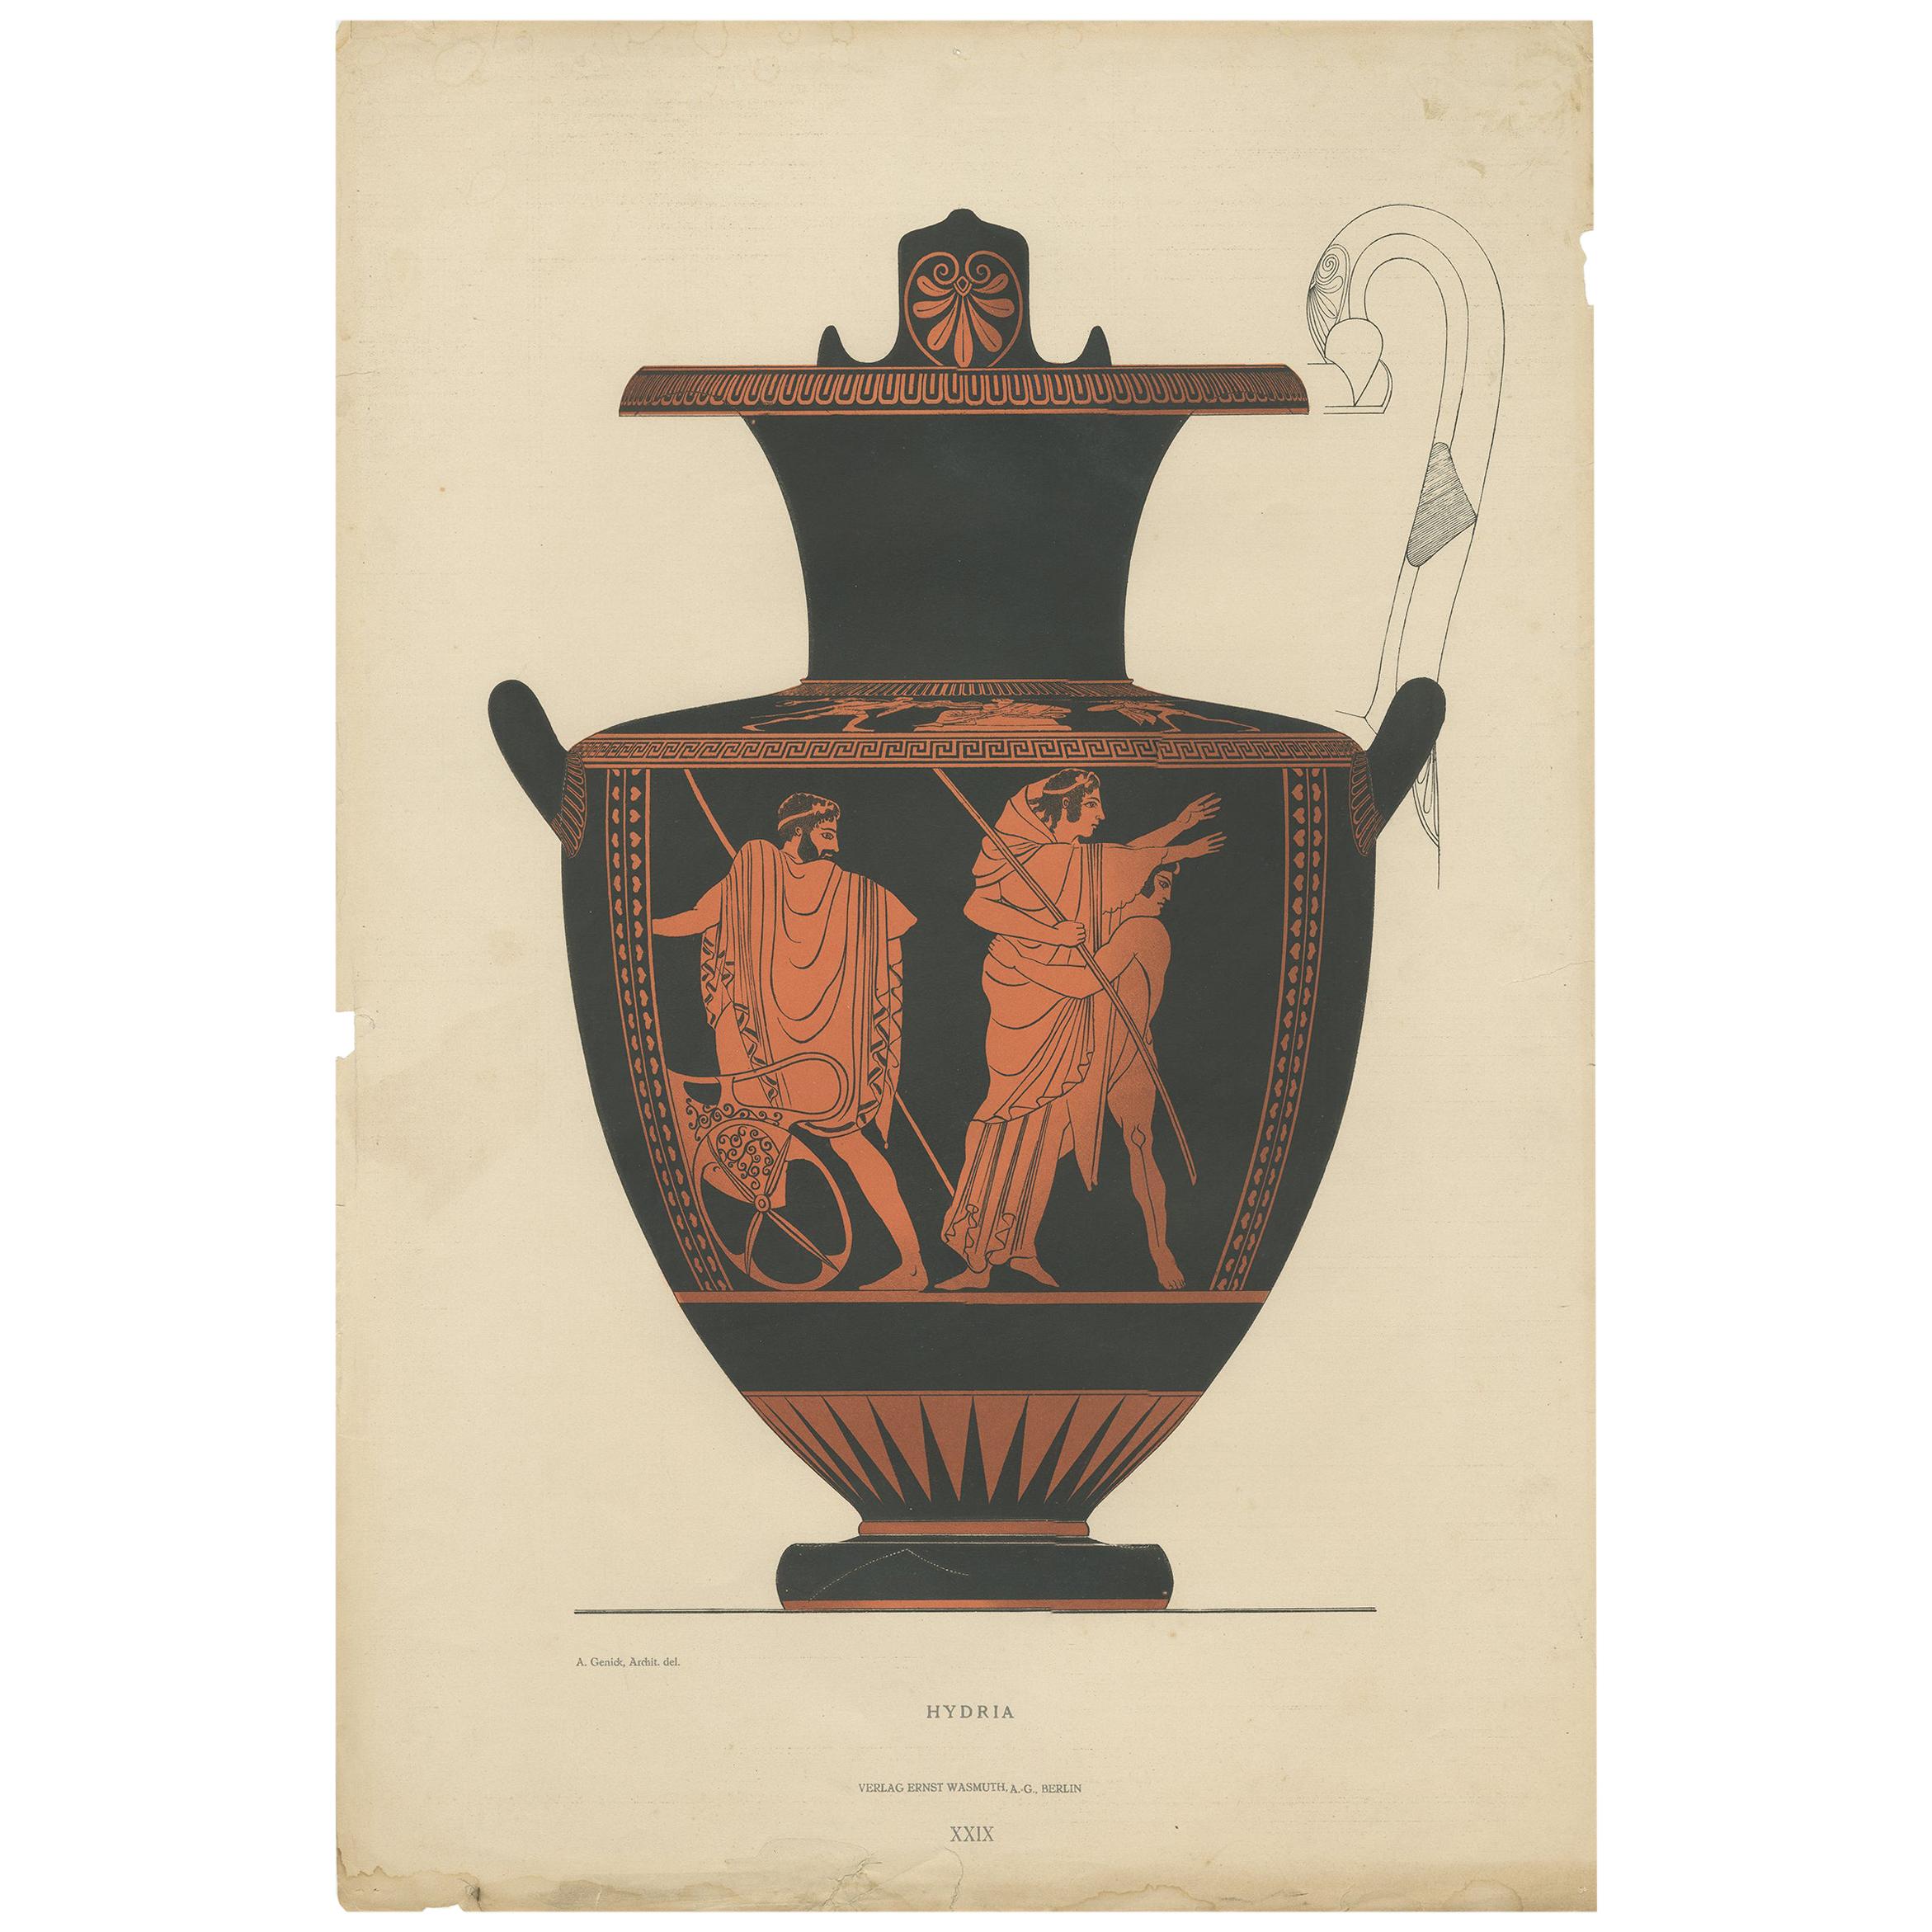 Antique Print of Greek Ceramics 'Hydria' by Genick (1883)